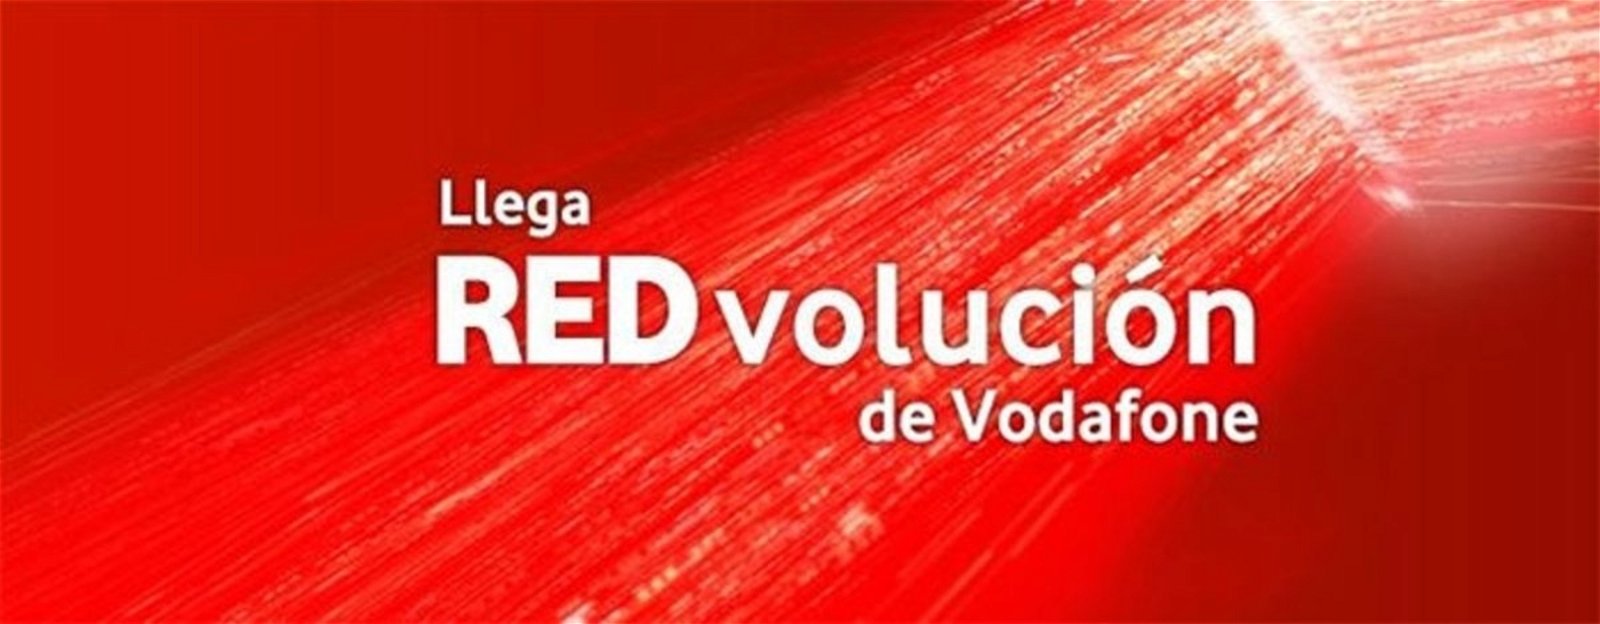 Combinada Vodafone